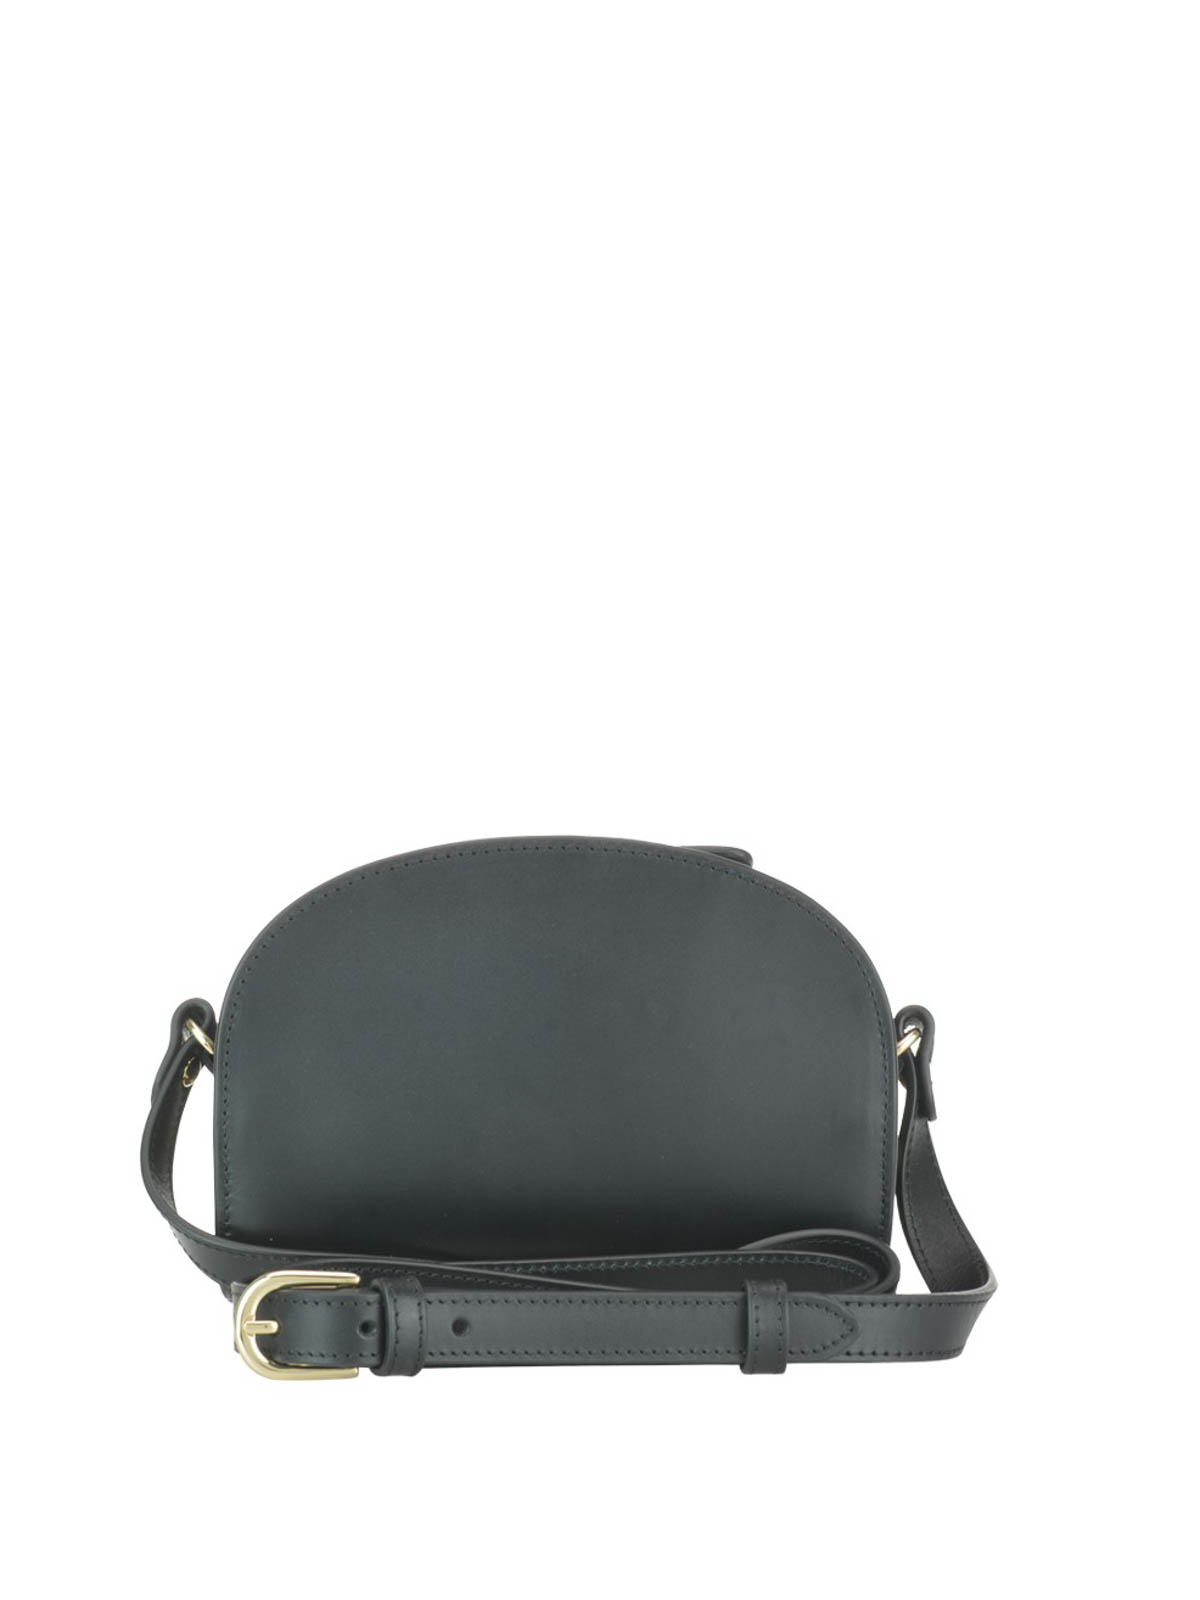 Shop Apc Black Leather Half-moon Bag In Negro